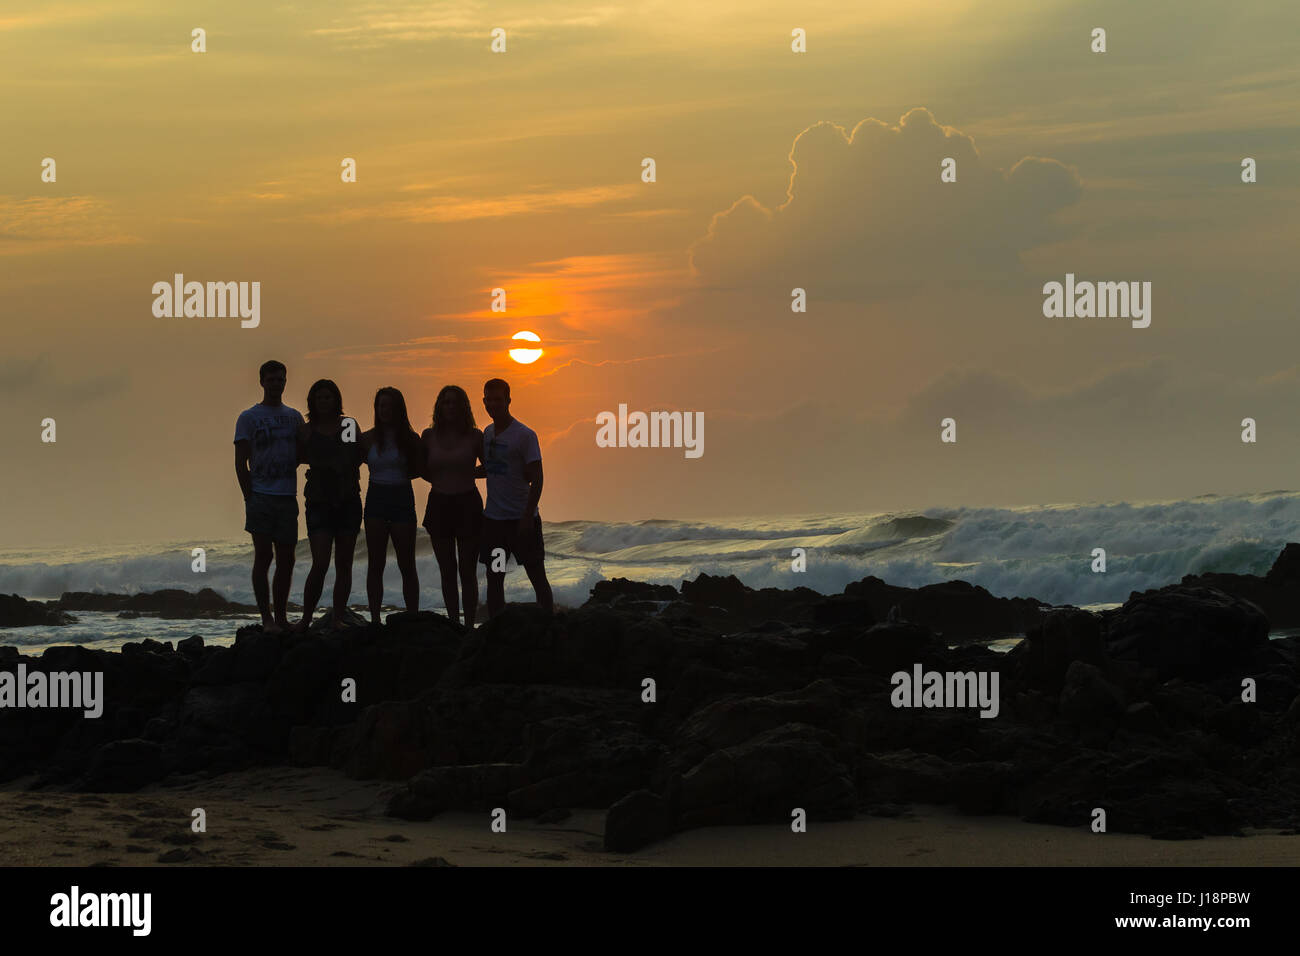 Freunde Mädchen jungen Teenager Sonnenaufgang am Morgen Strand Meer Silhouette entlang felsigen Ozean Küste. Stockfoto